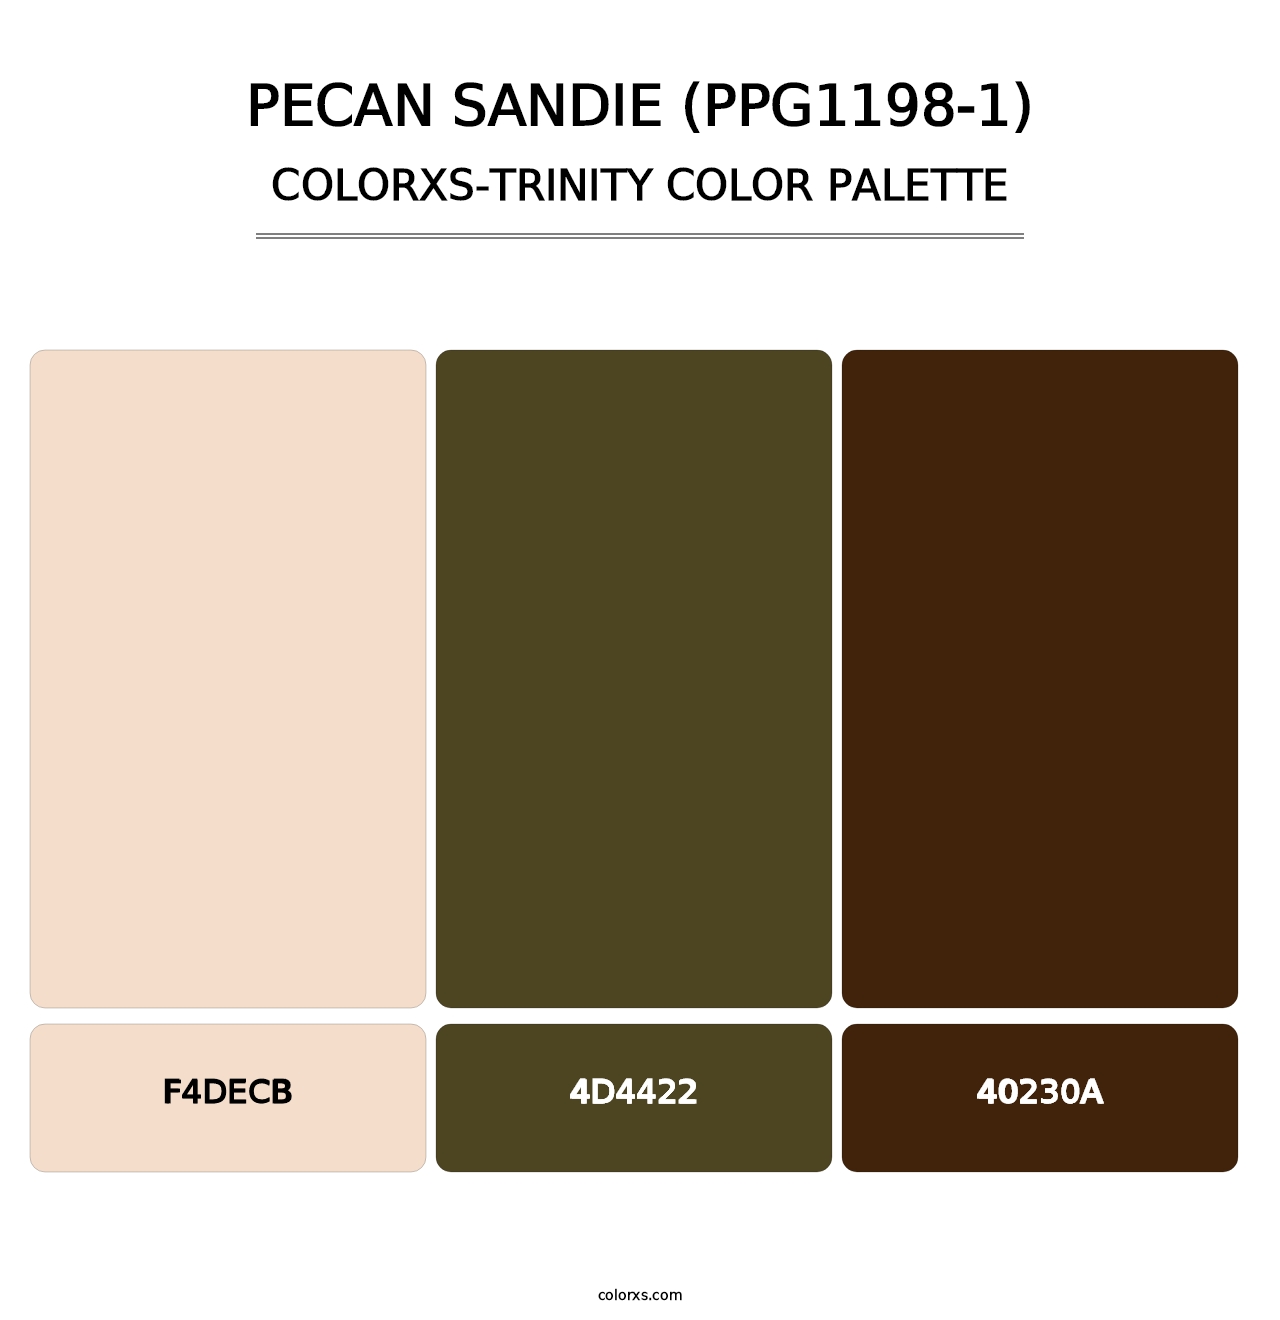 Pecan Sandie (PPG1198-1) - Colorxs Trinity Palette